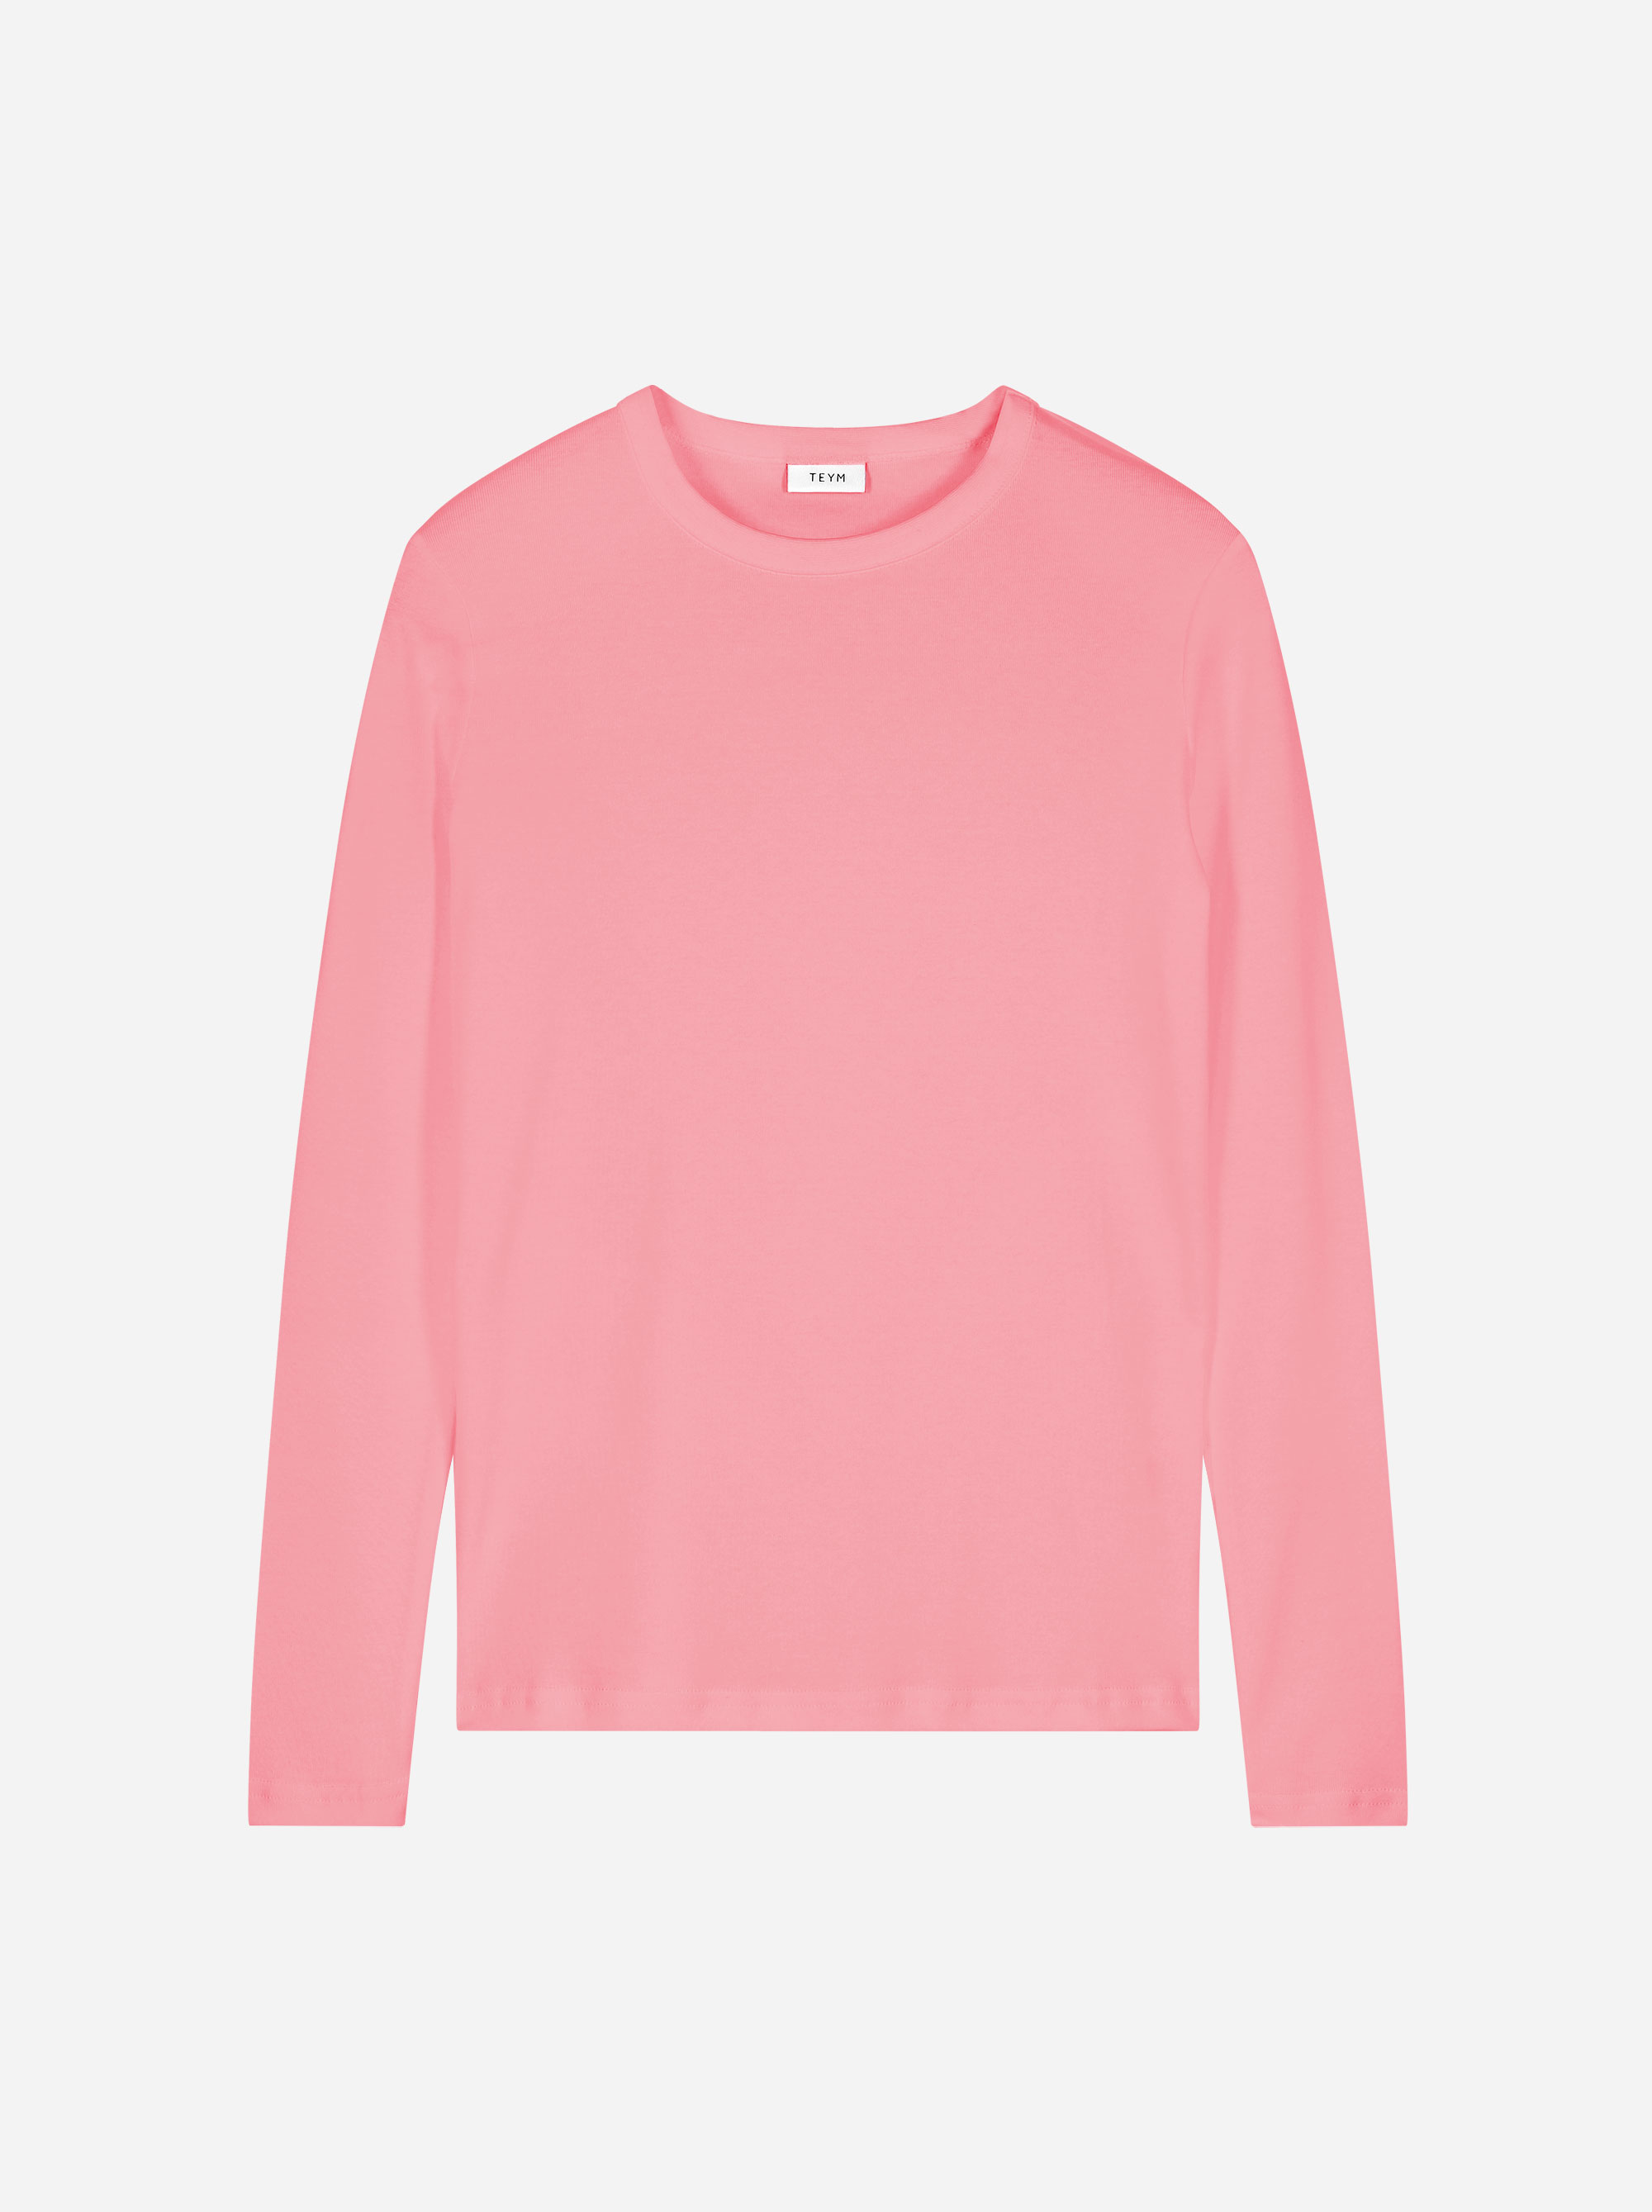 Teym - The Longsleeve T-Shirt - Women - Pink - 3